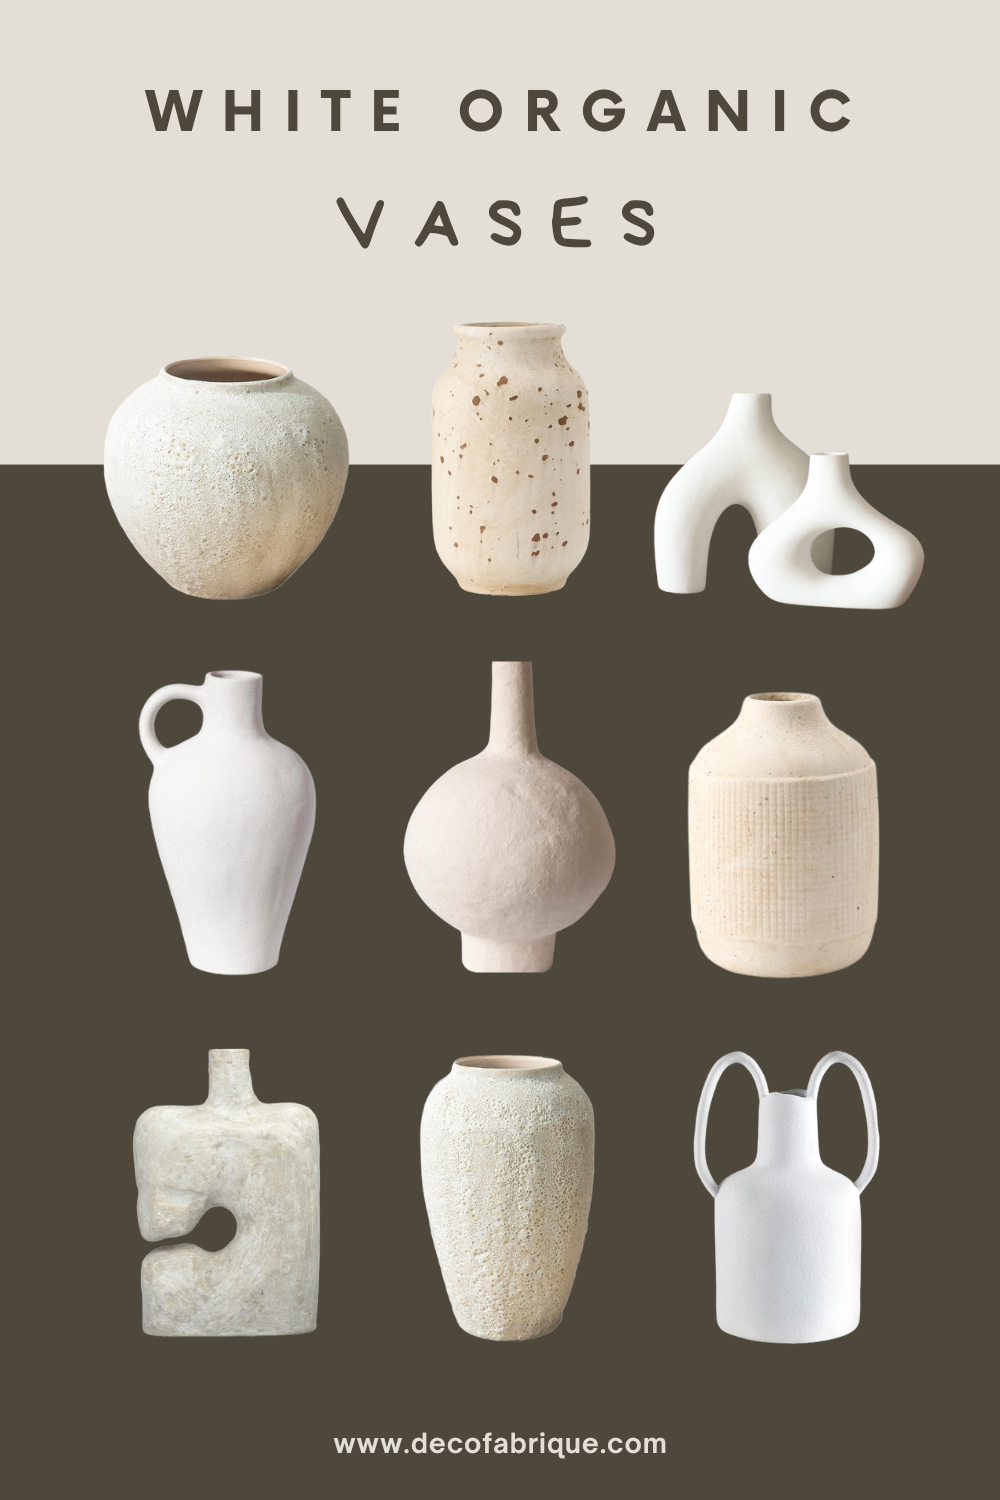 18 Organic Vases